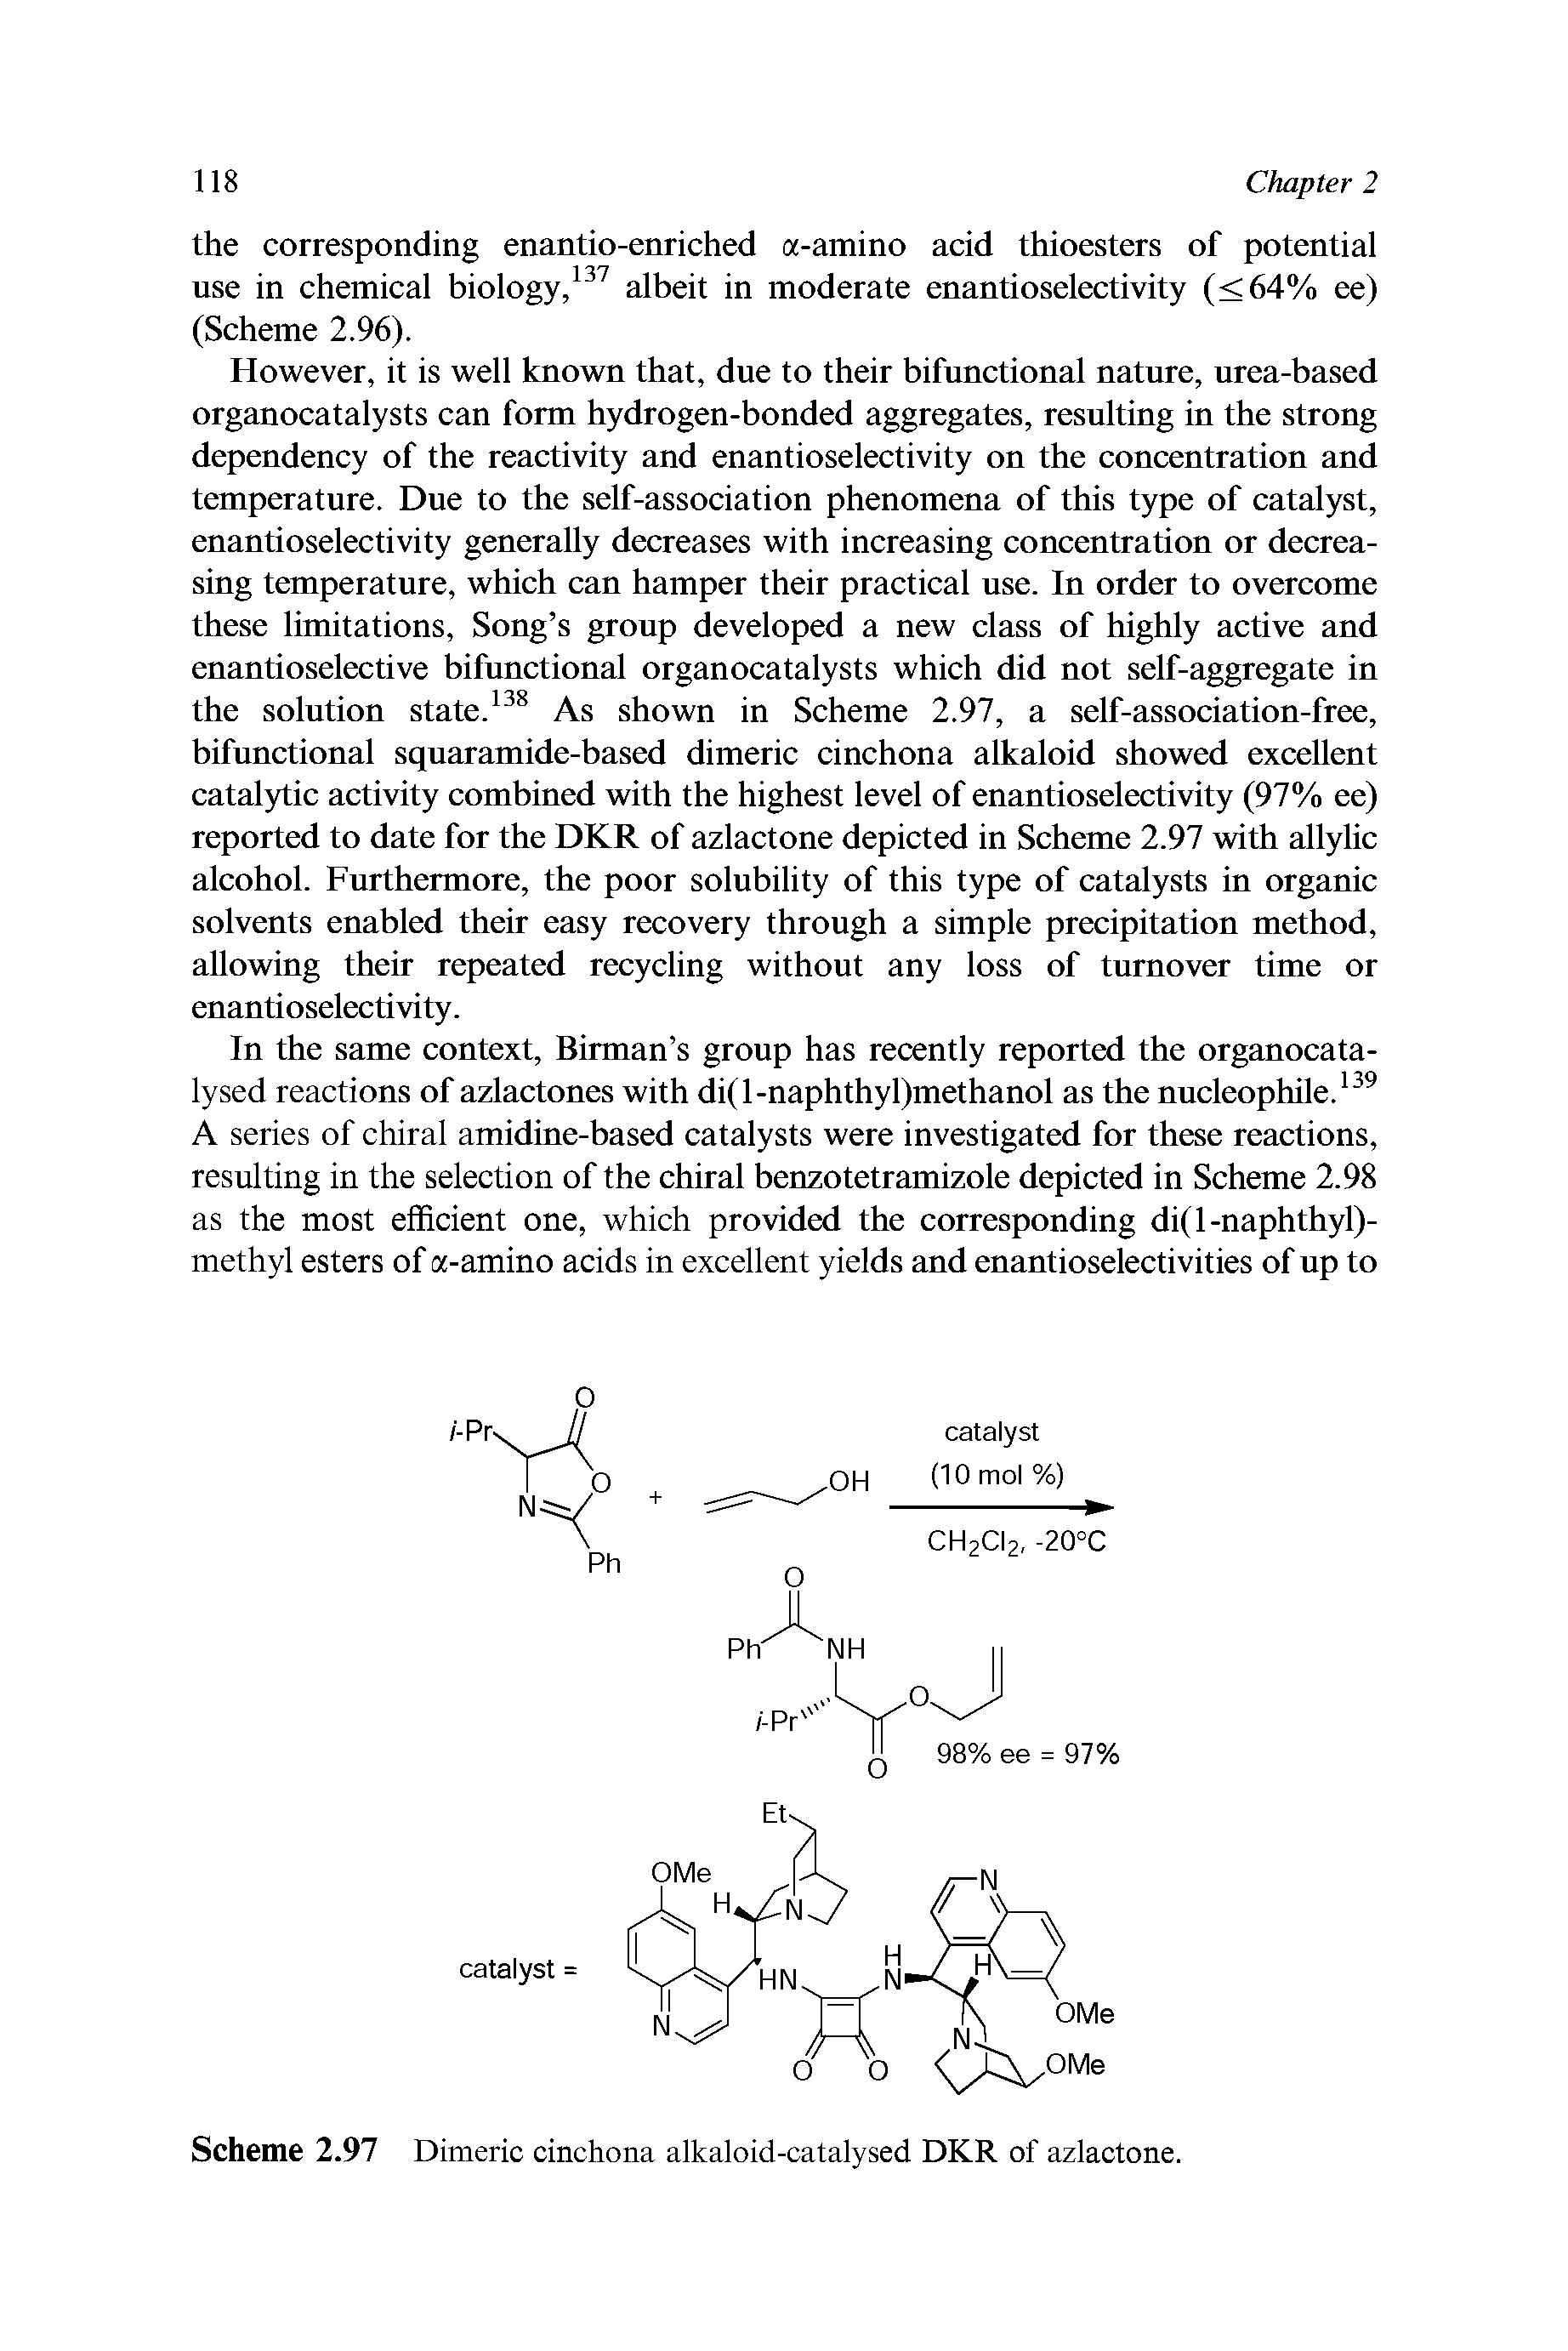 Scheme 2.97 Dimeric cinchona alkaloid-catalysed DKR azlaetone.